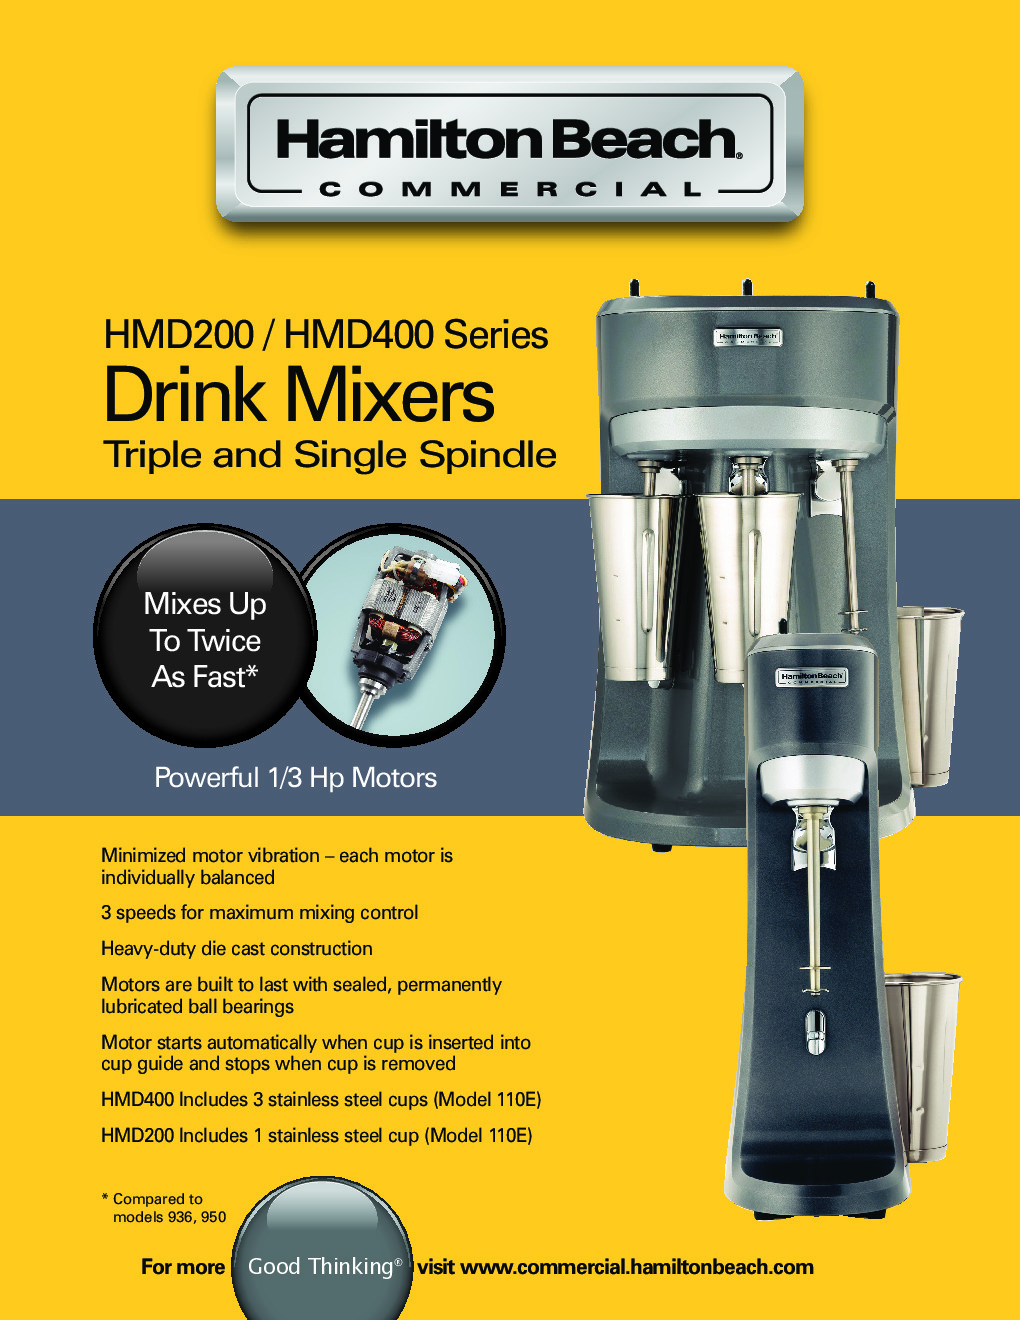 Hamilton Beach HMD400-CE Triple Spindle Drink Mixer (3) Speeds - 220/240V (International Use Only)